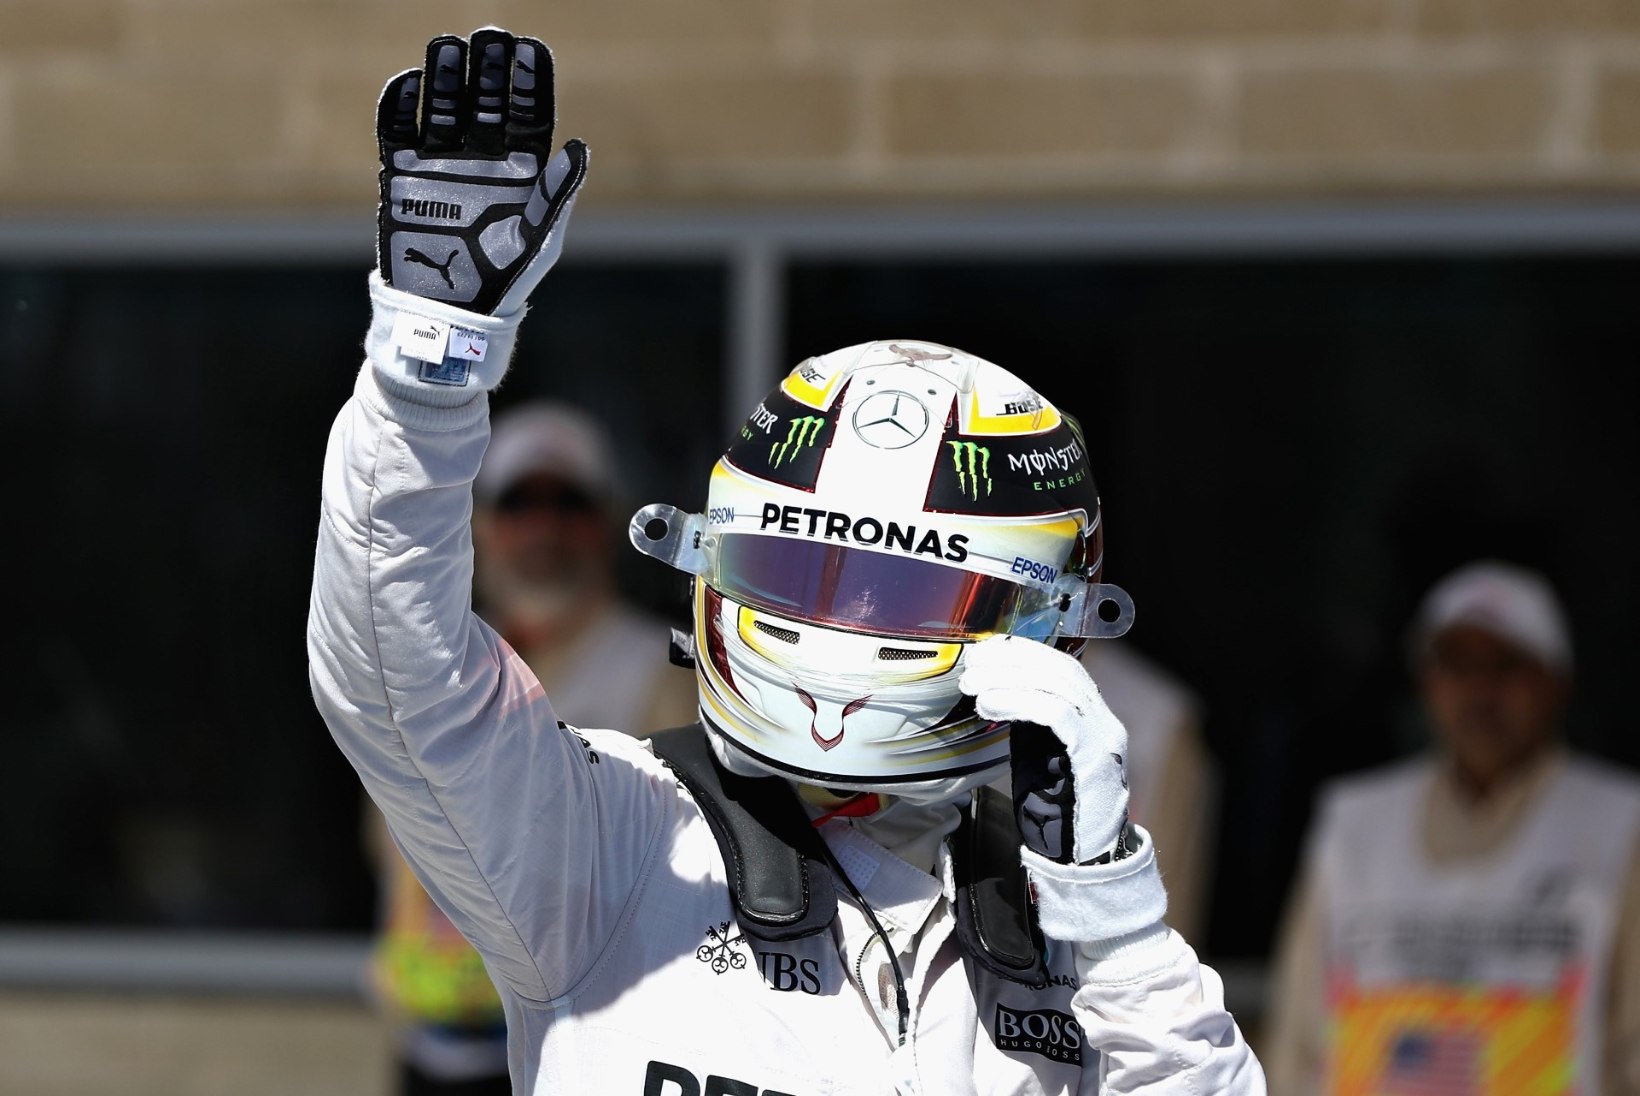 EI ANNA ALLA: Hamilton võttis Rosbergi ees USA GP-l parima stardikoha